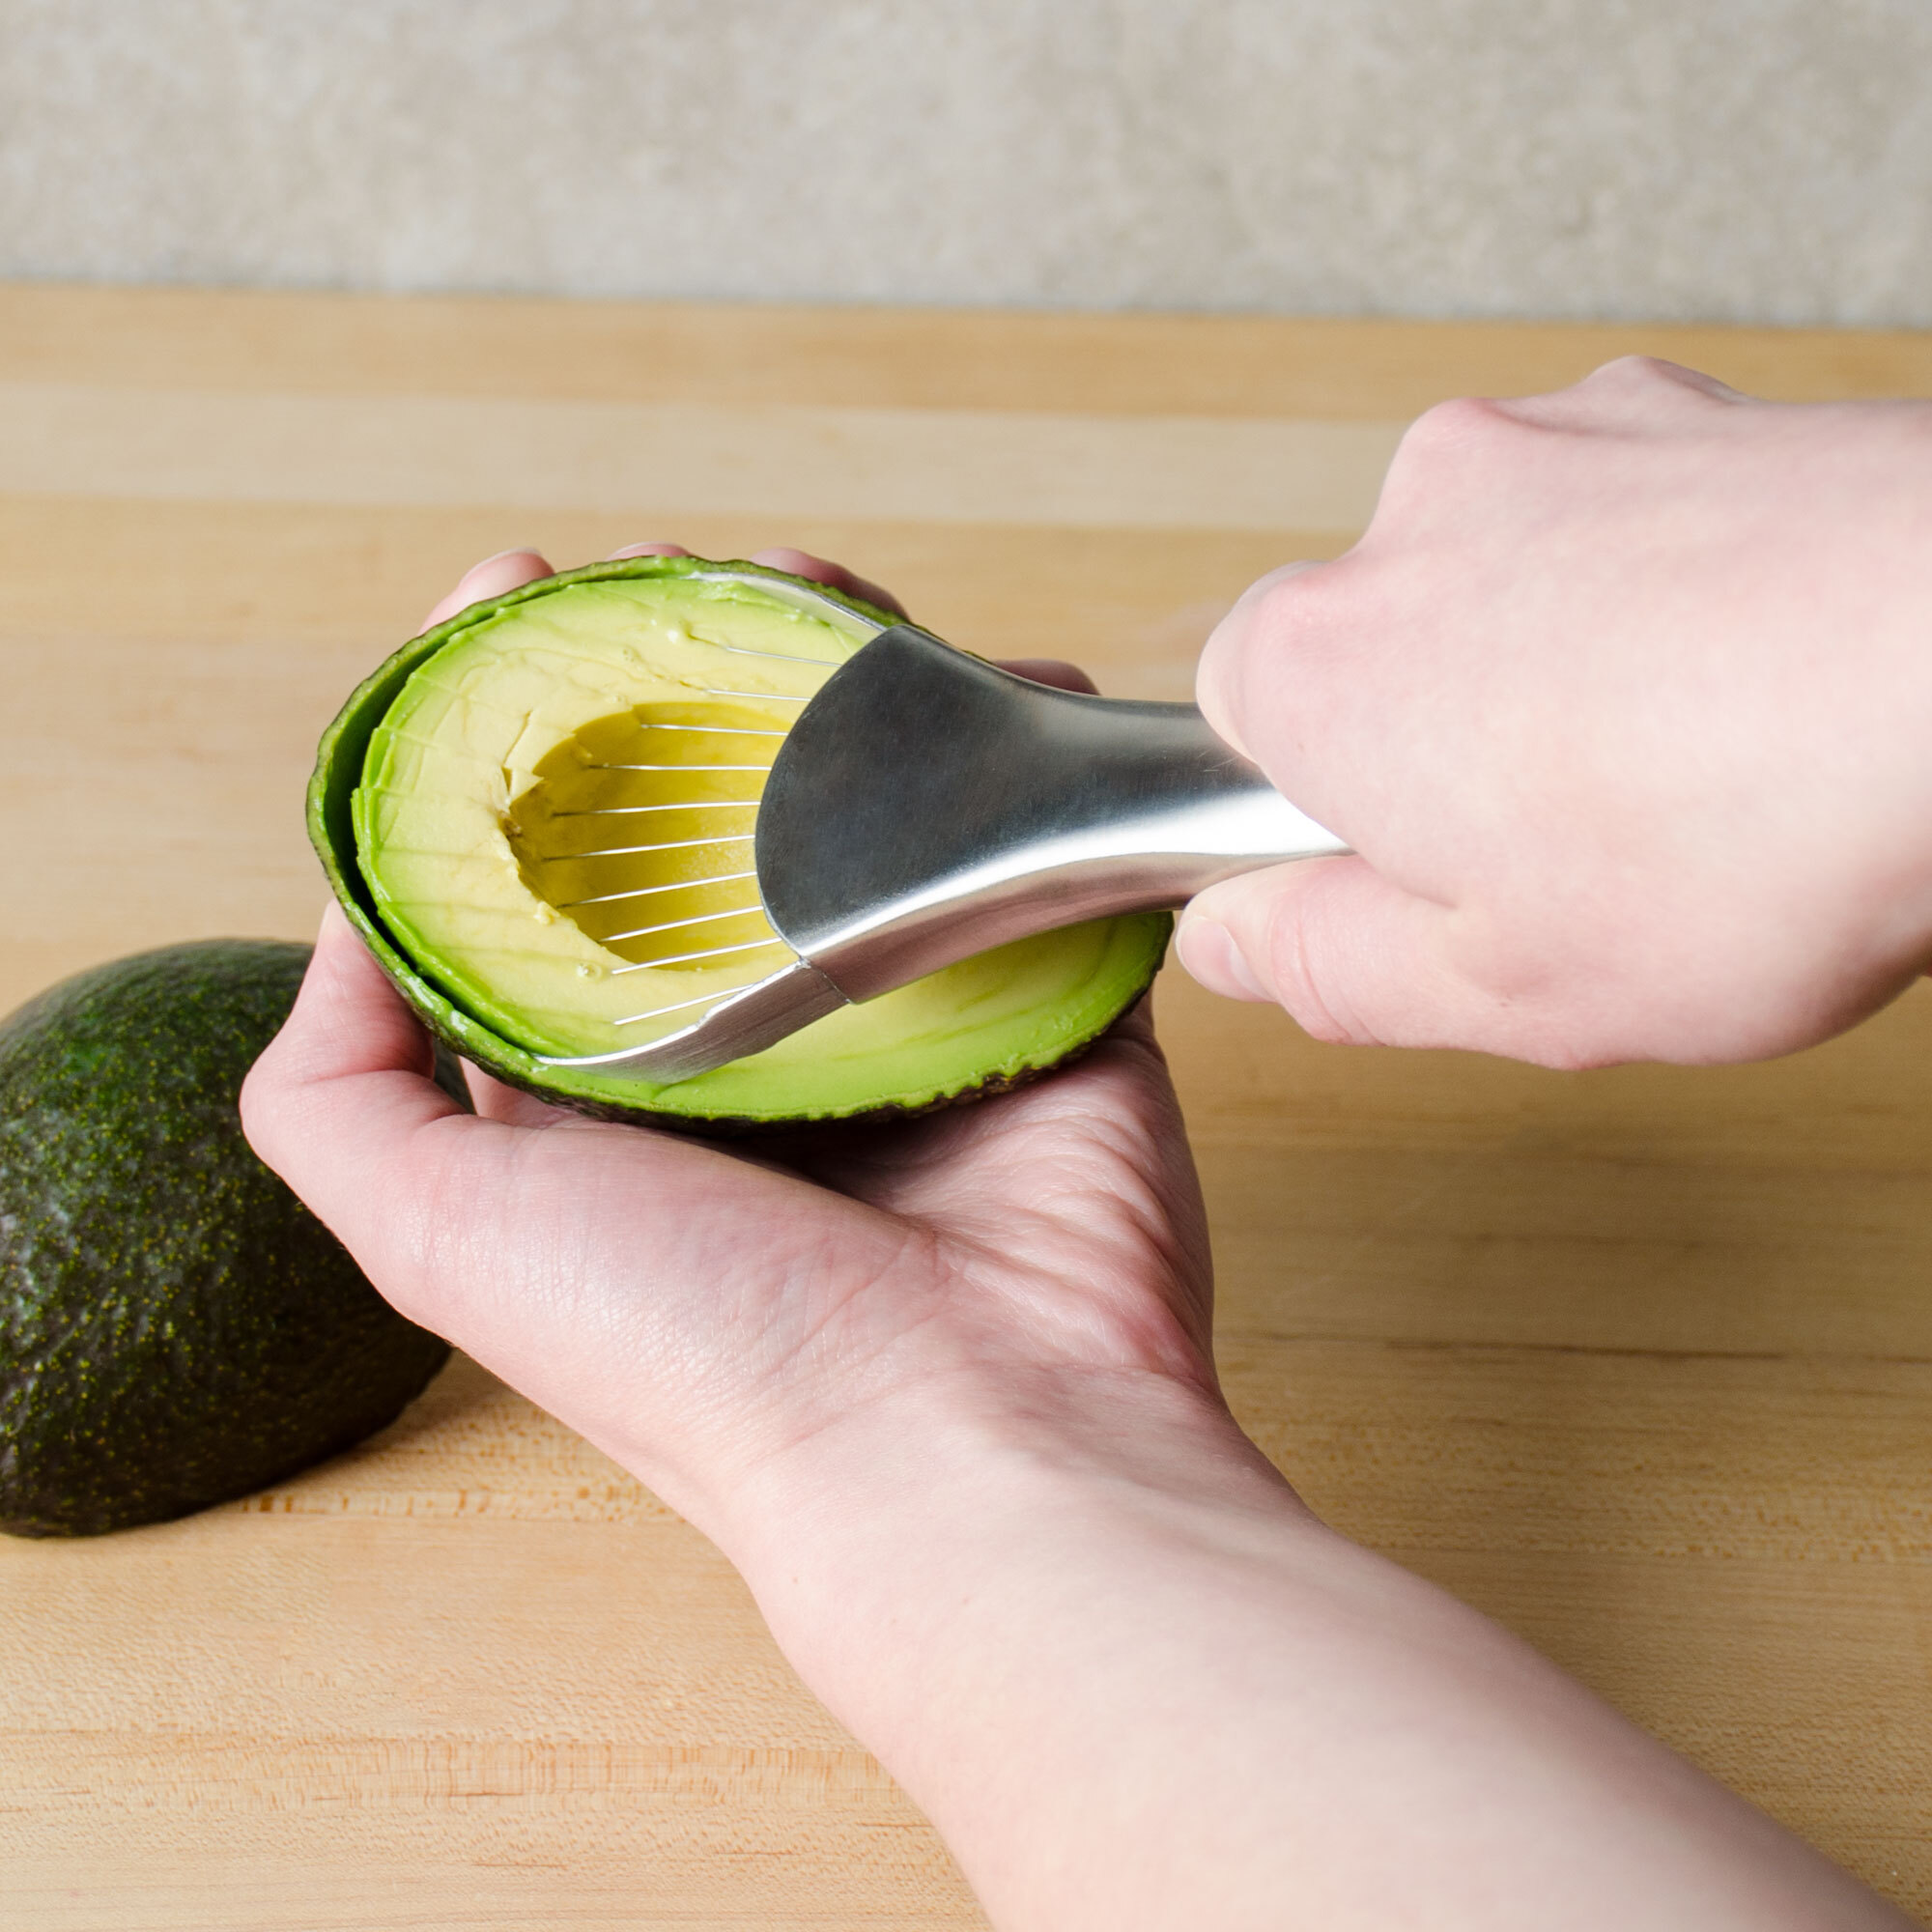 best avocado slicer and pitter